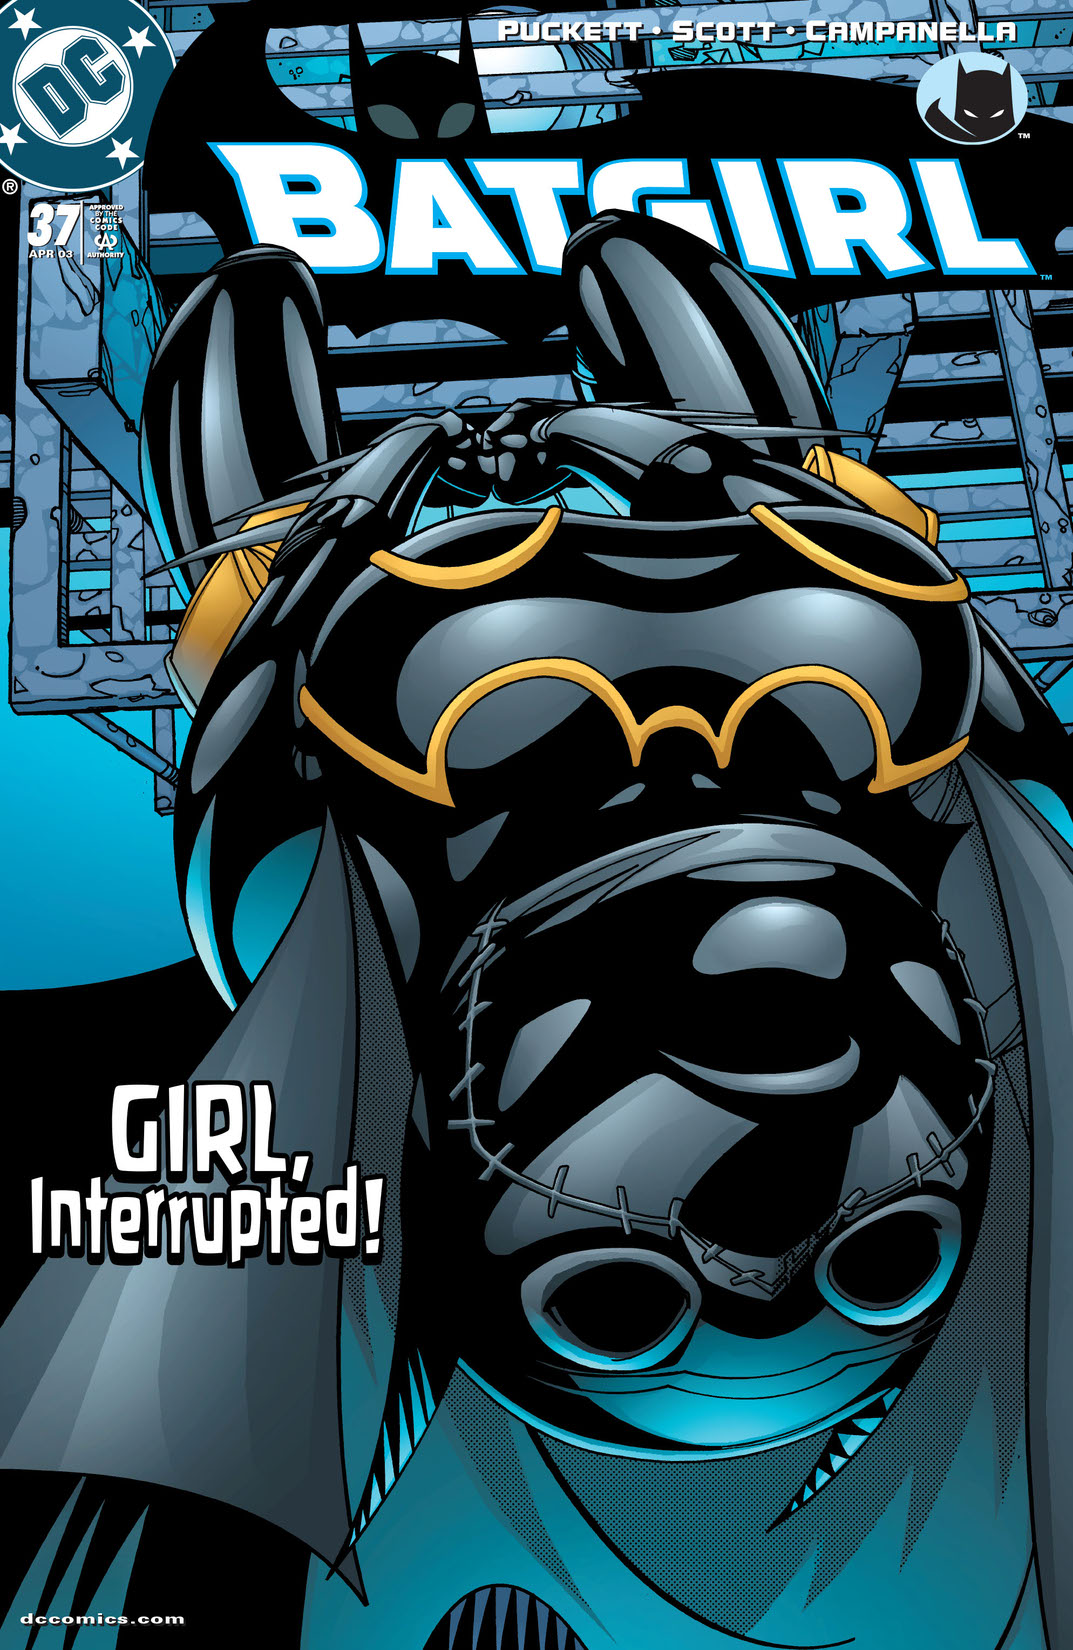 Batgirl (2000-) #37 preview images